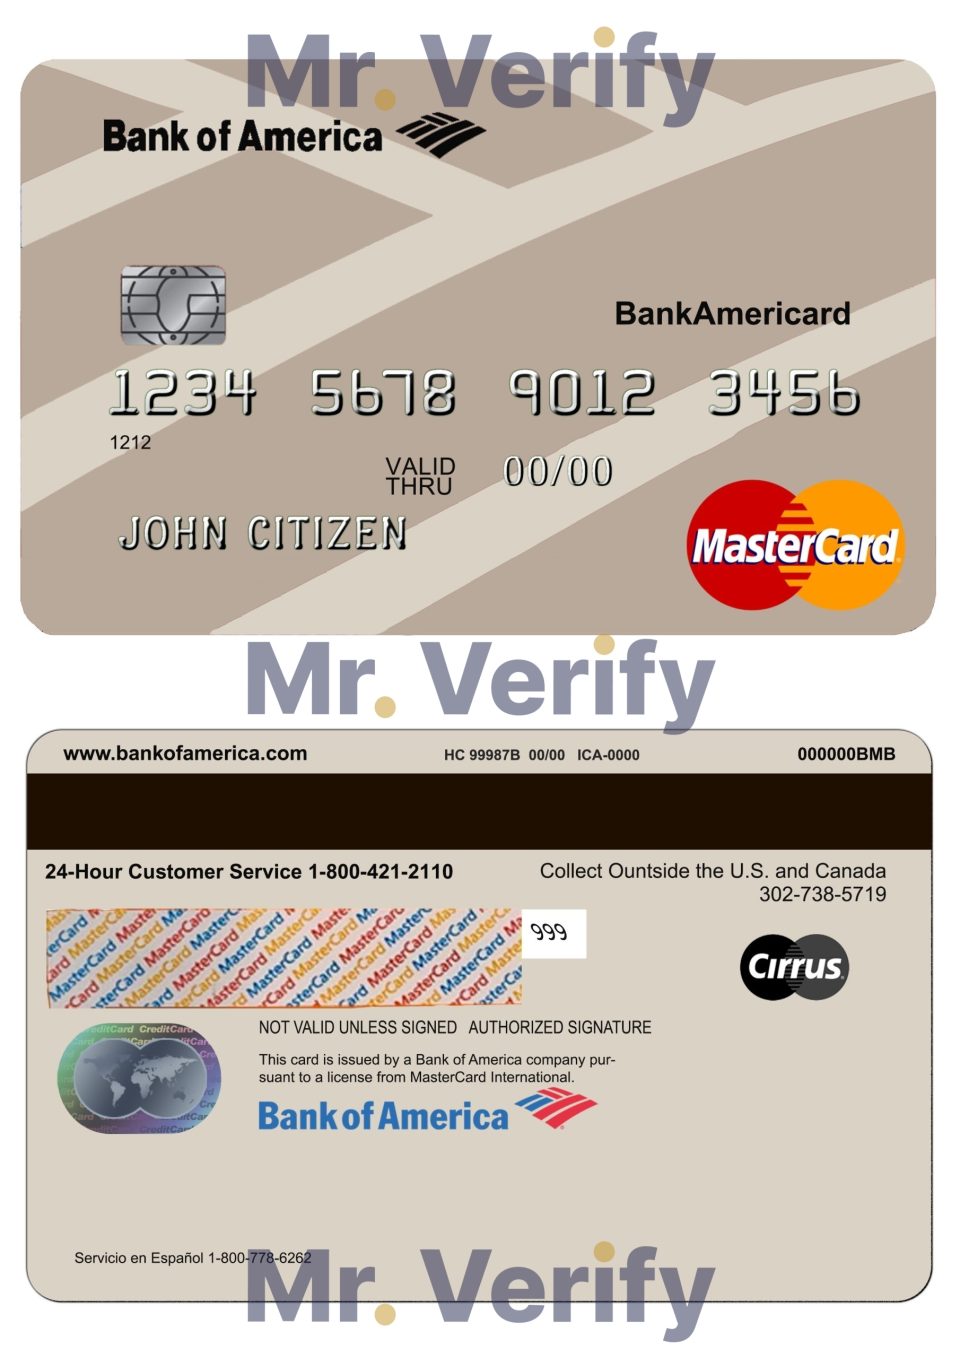 Fillable USA Bank of America bank MasterCard Templates | Layer-Based PSD